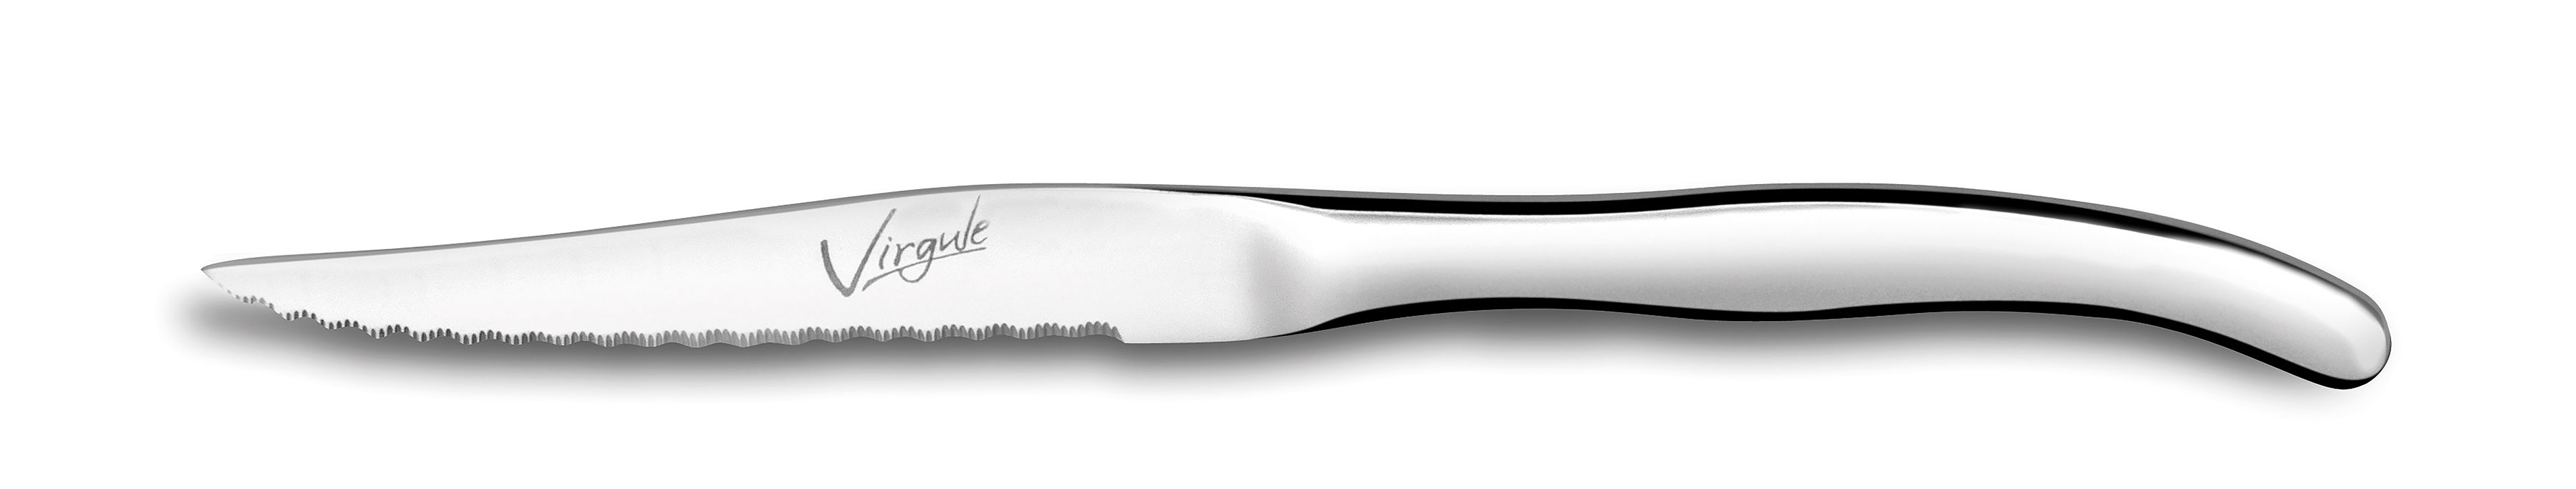 Couteau à découper Giesser - L360 - Matfer-Bourgeat